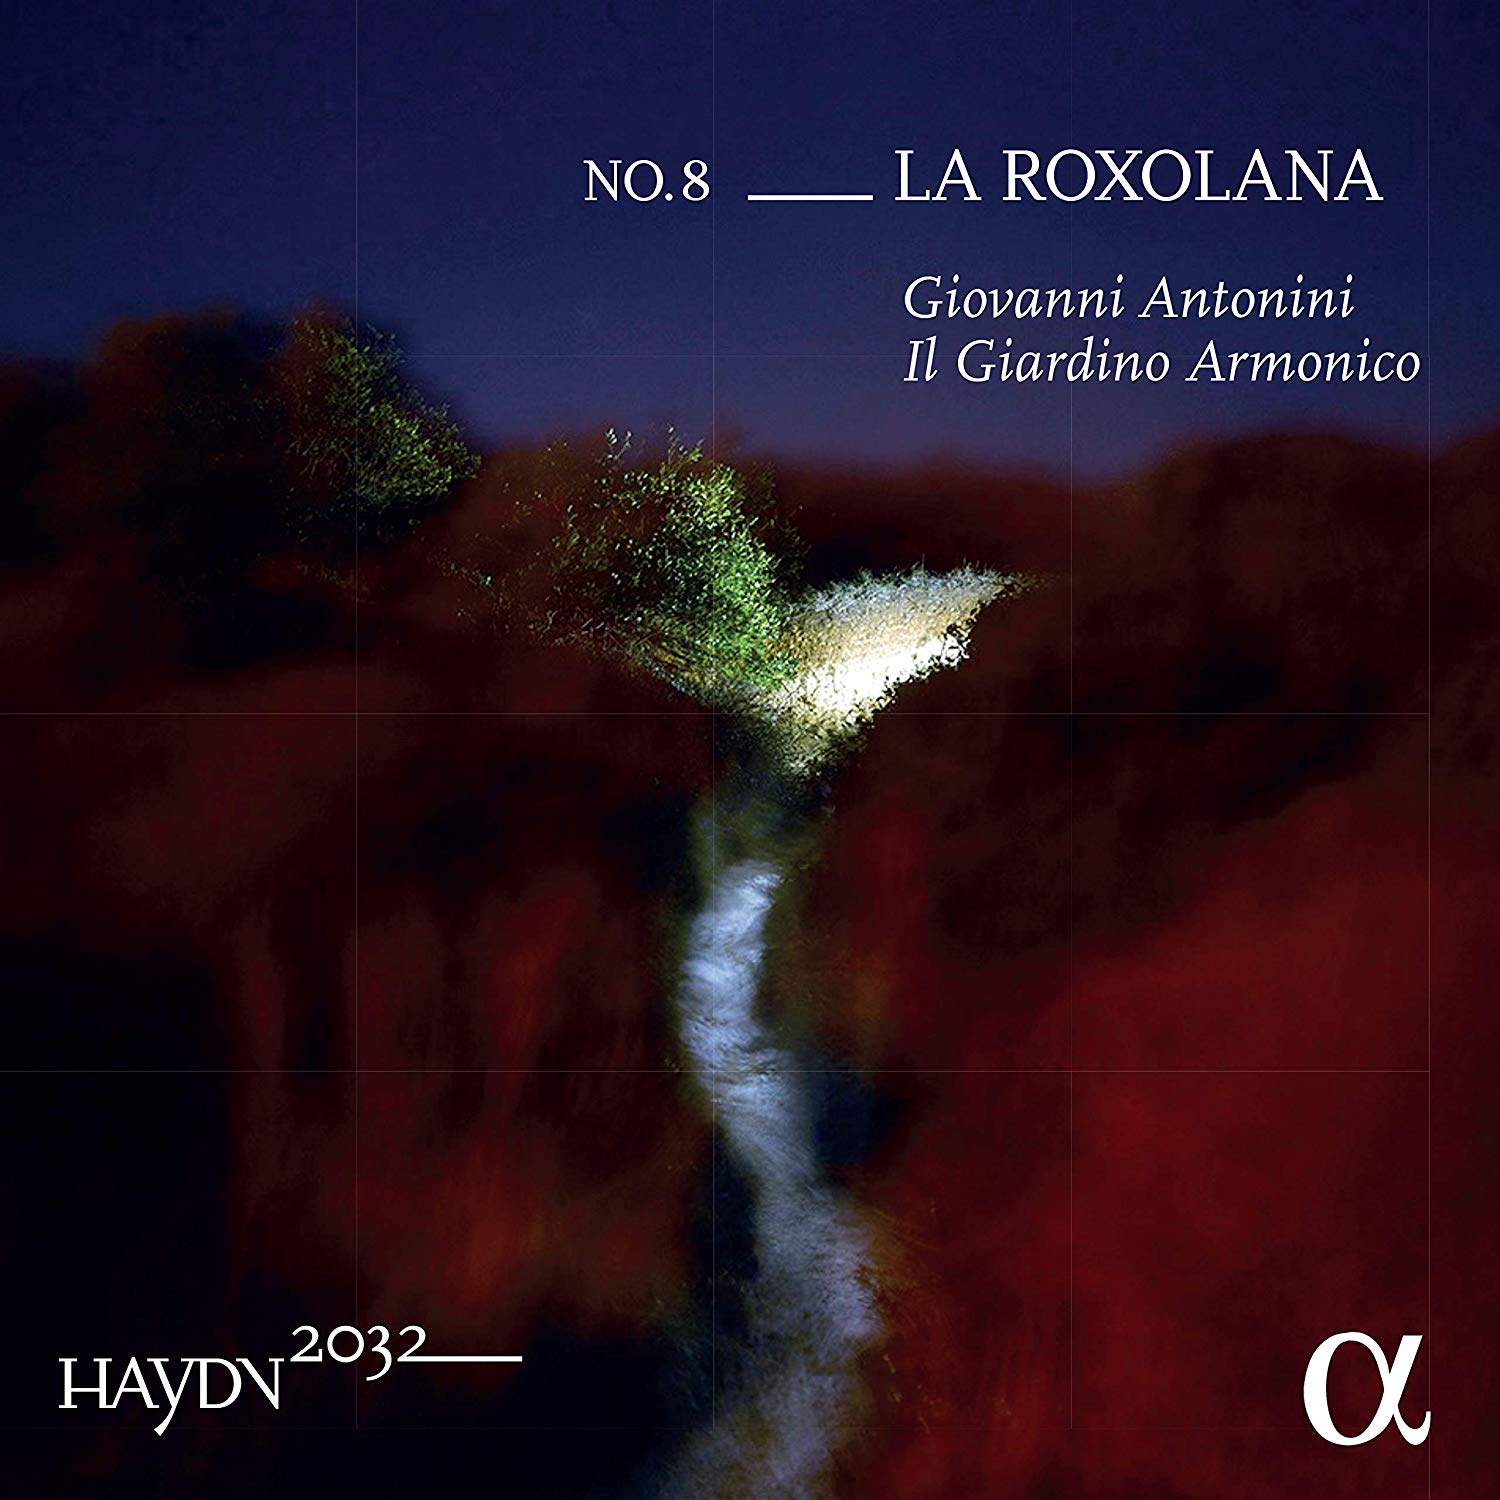 Haydn 2032 vol. 8 La roxolana CD cover